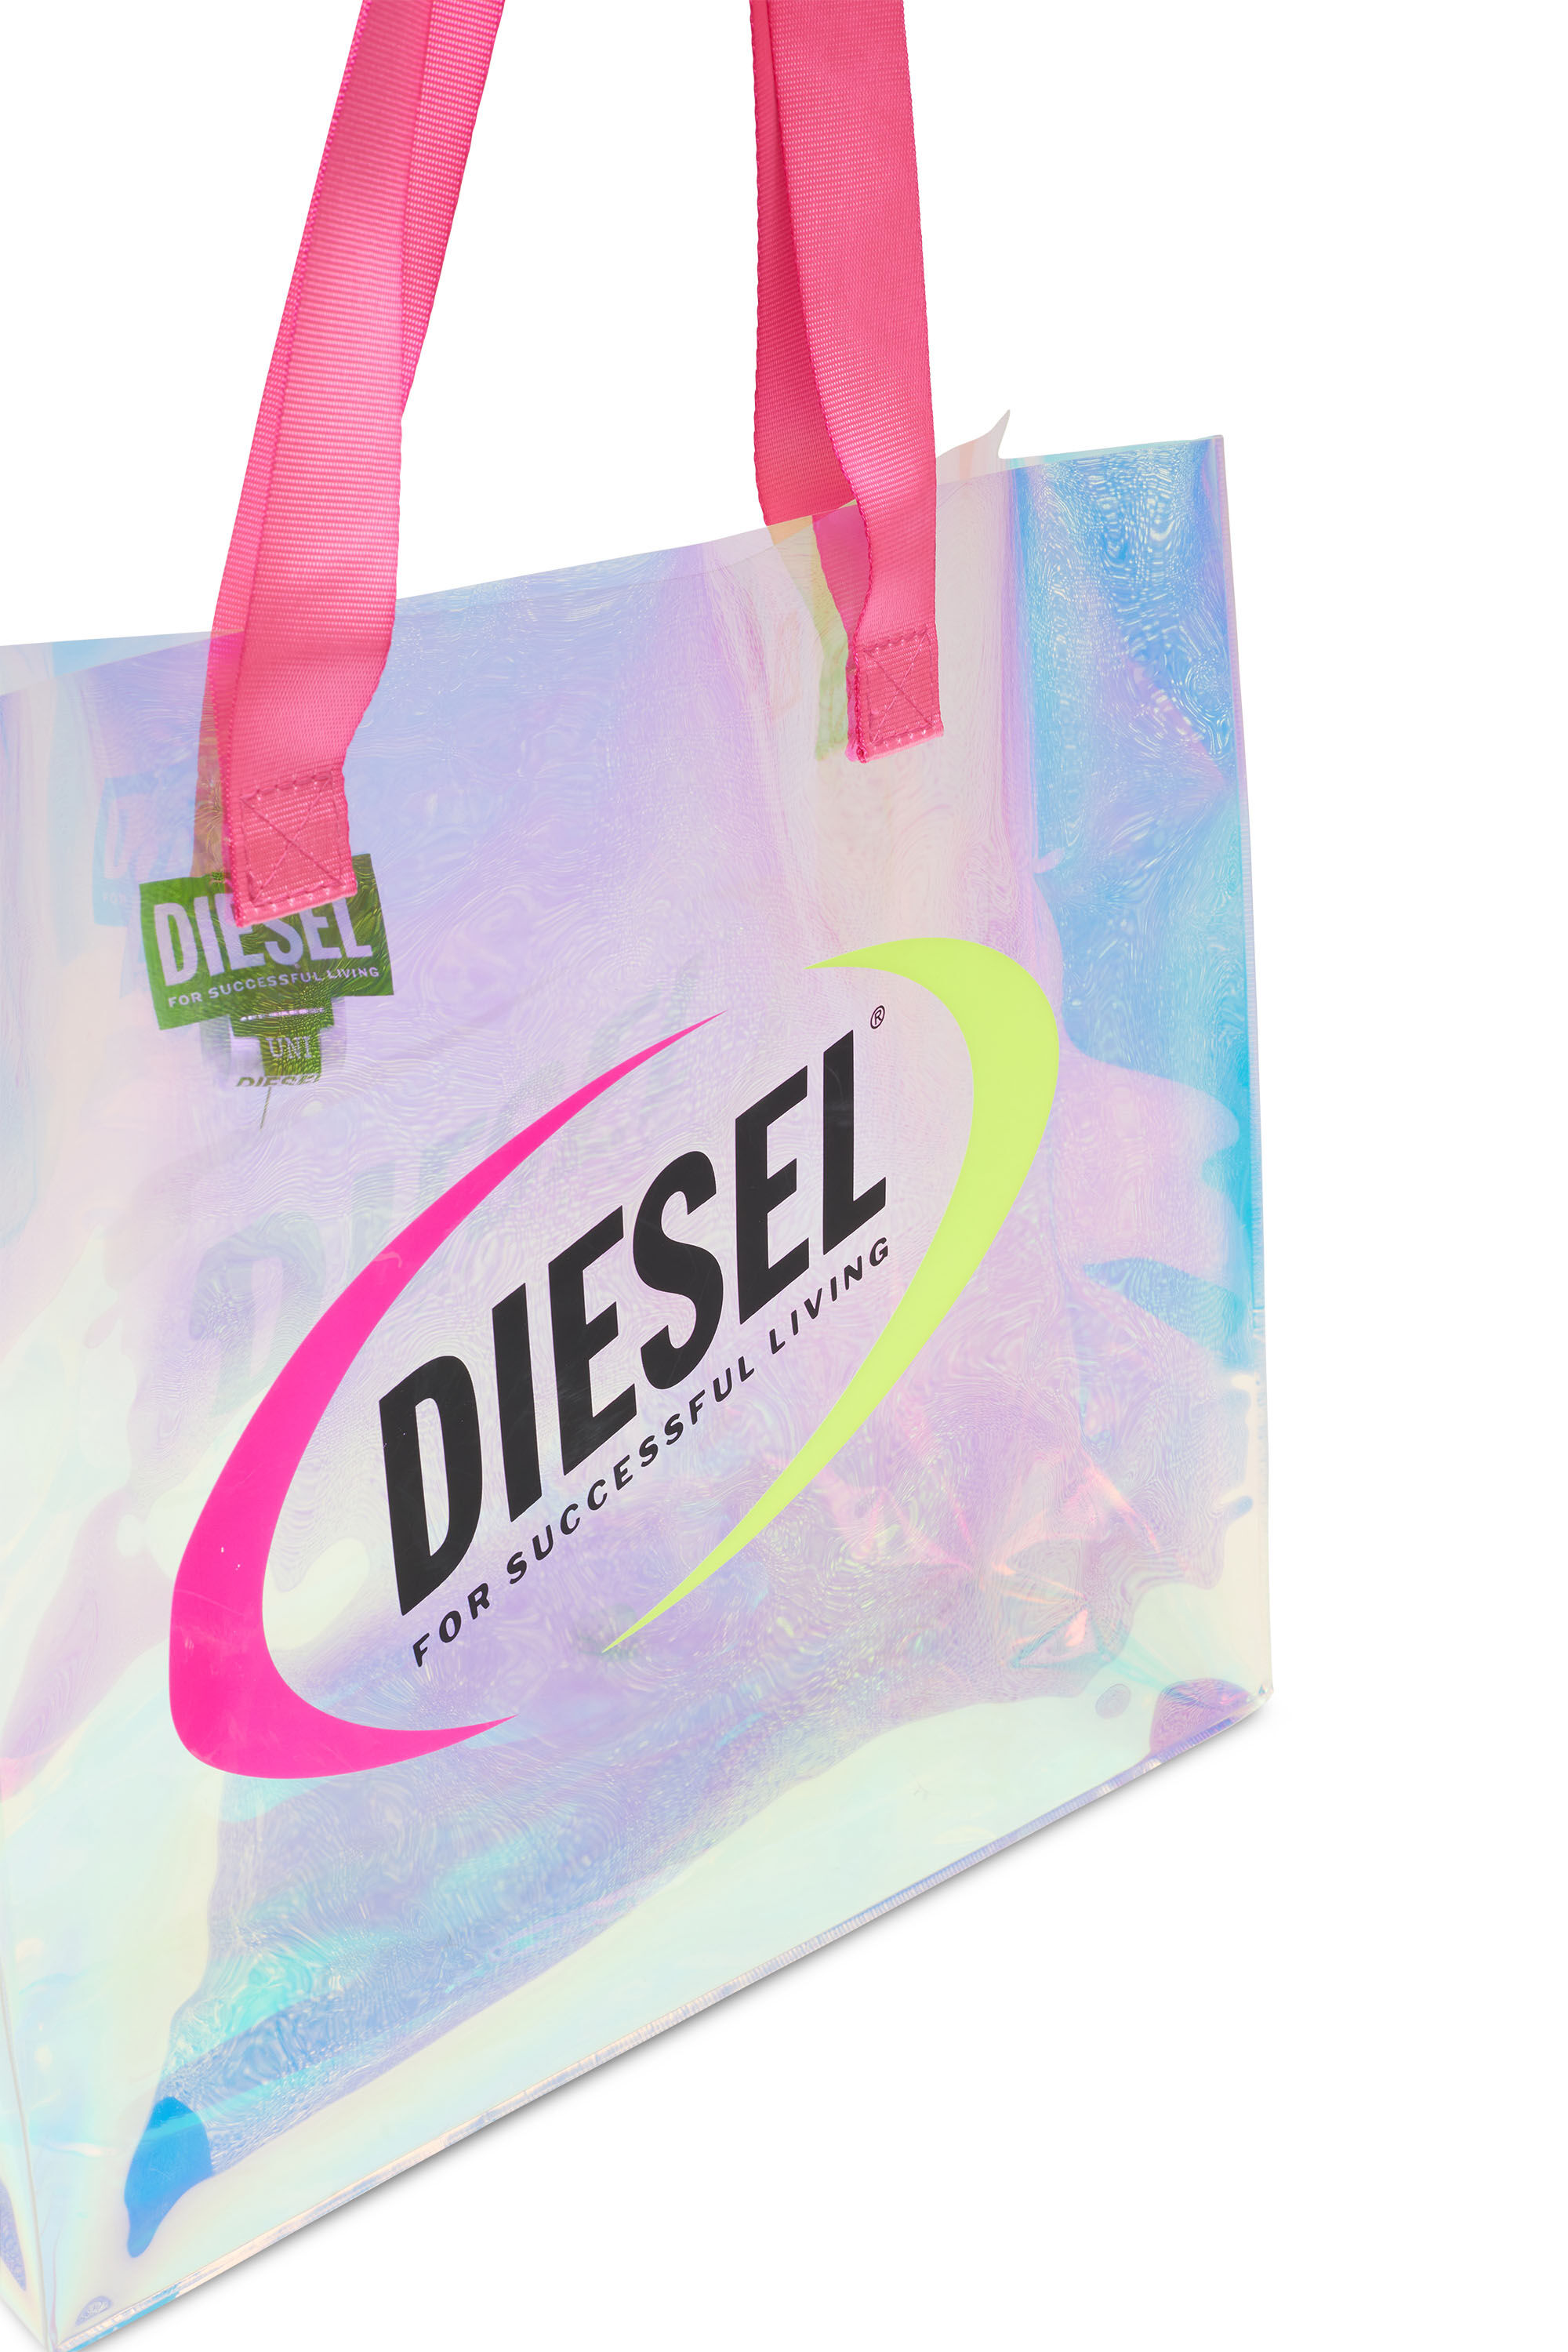 Diesel - WORSA, アジュール - Image 5